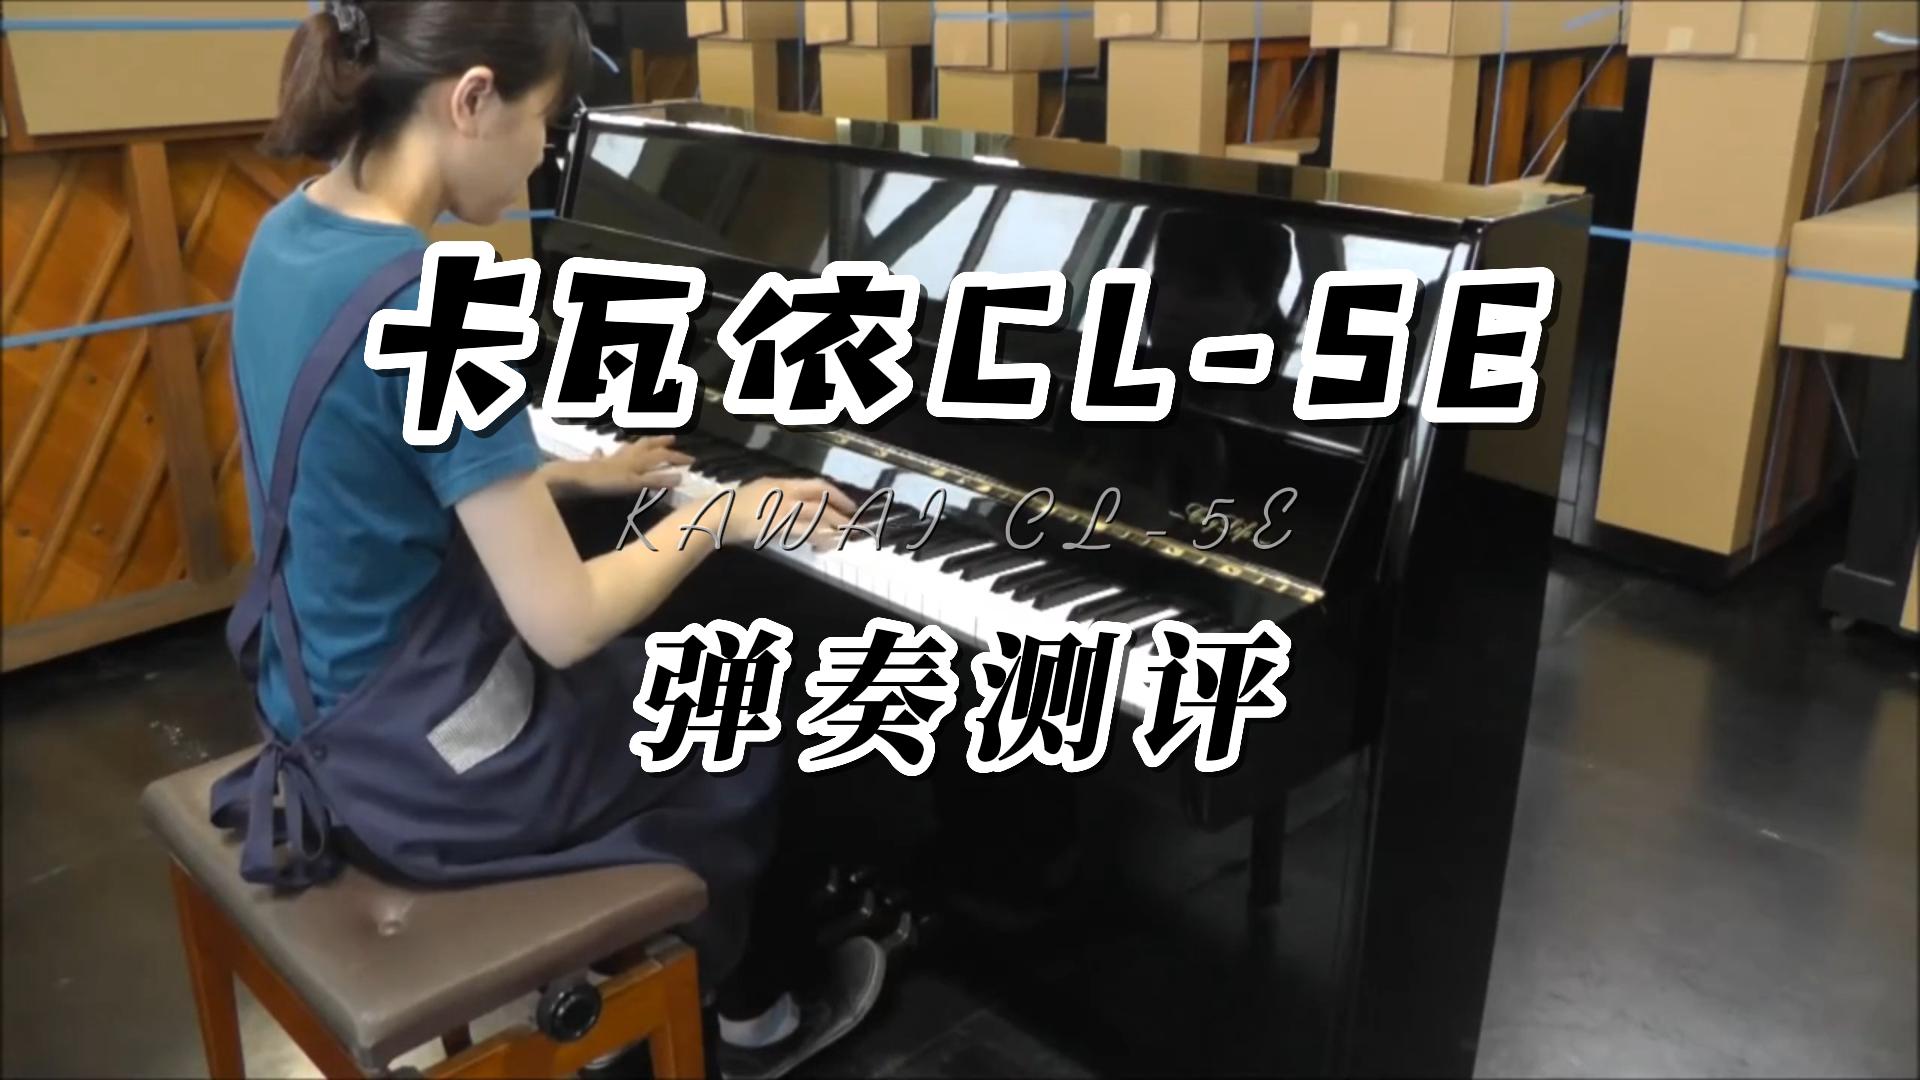 KAWAI 卡瓦依CL-5E立式钢琴经典小巧款弹奏测评-柏通琴行整理